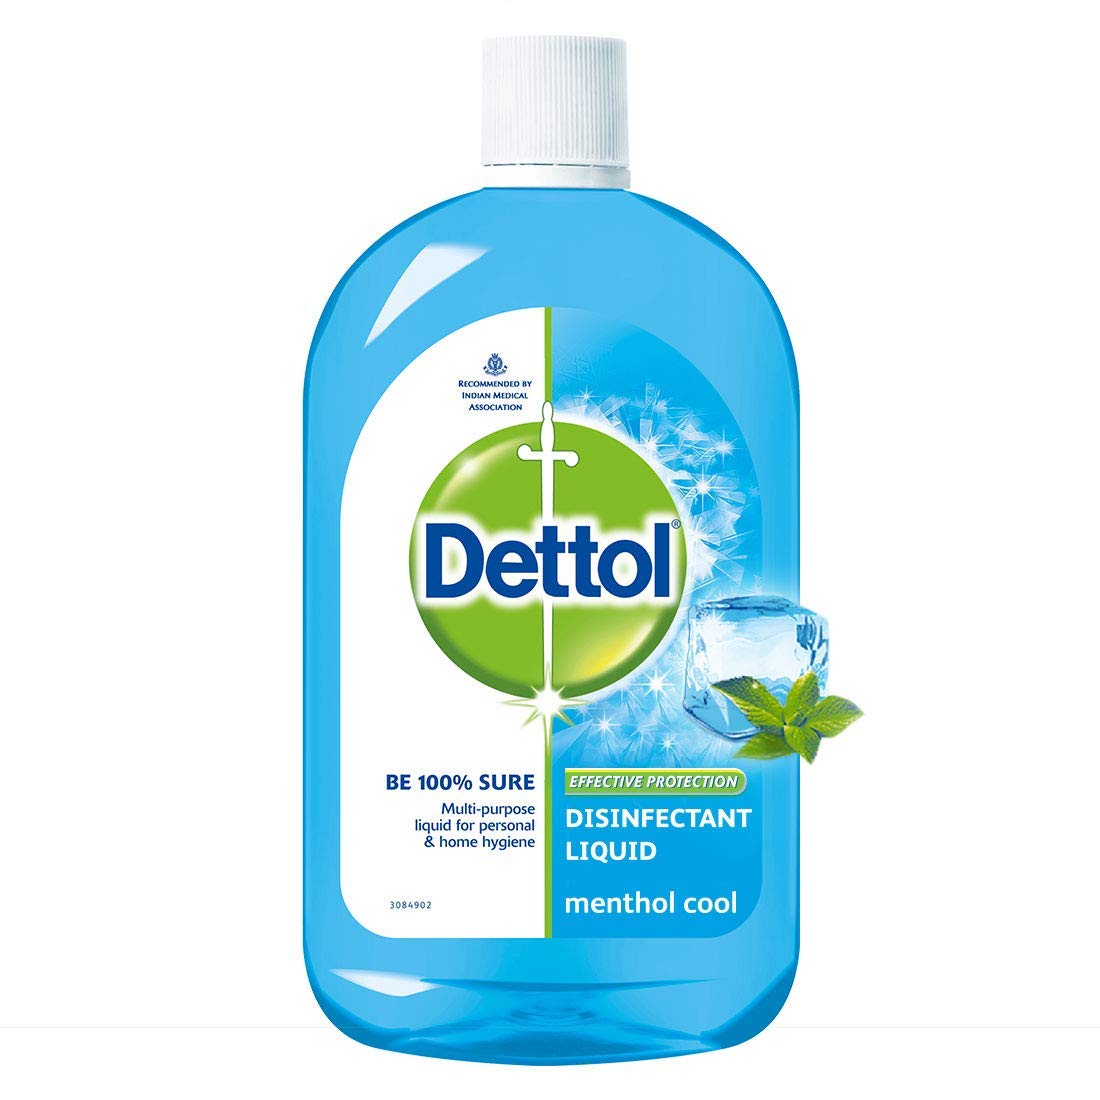 Dettol for Multi-Purpose Germ Protection, Menthol Cool Liquid Disinfectant, 500 ml